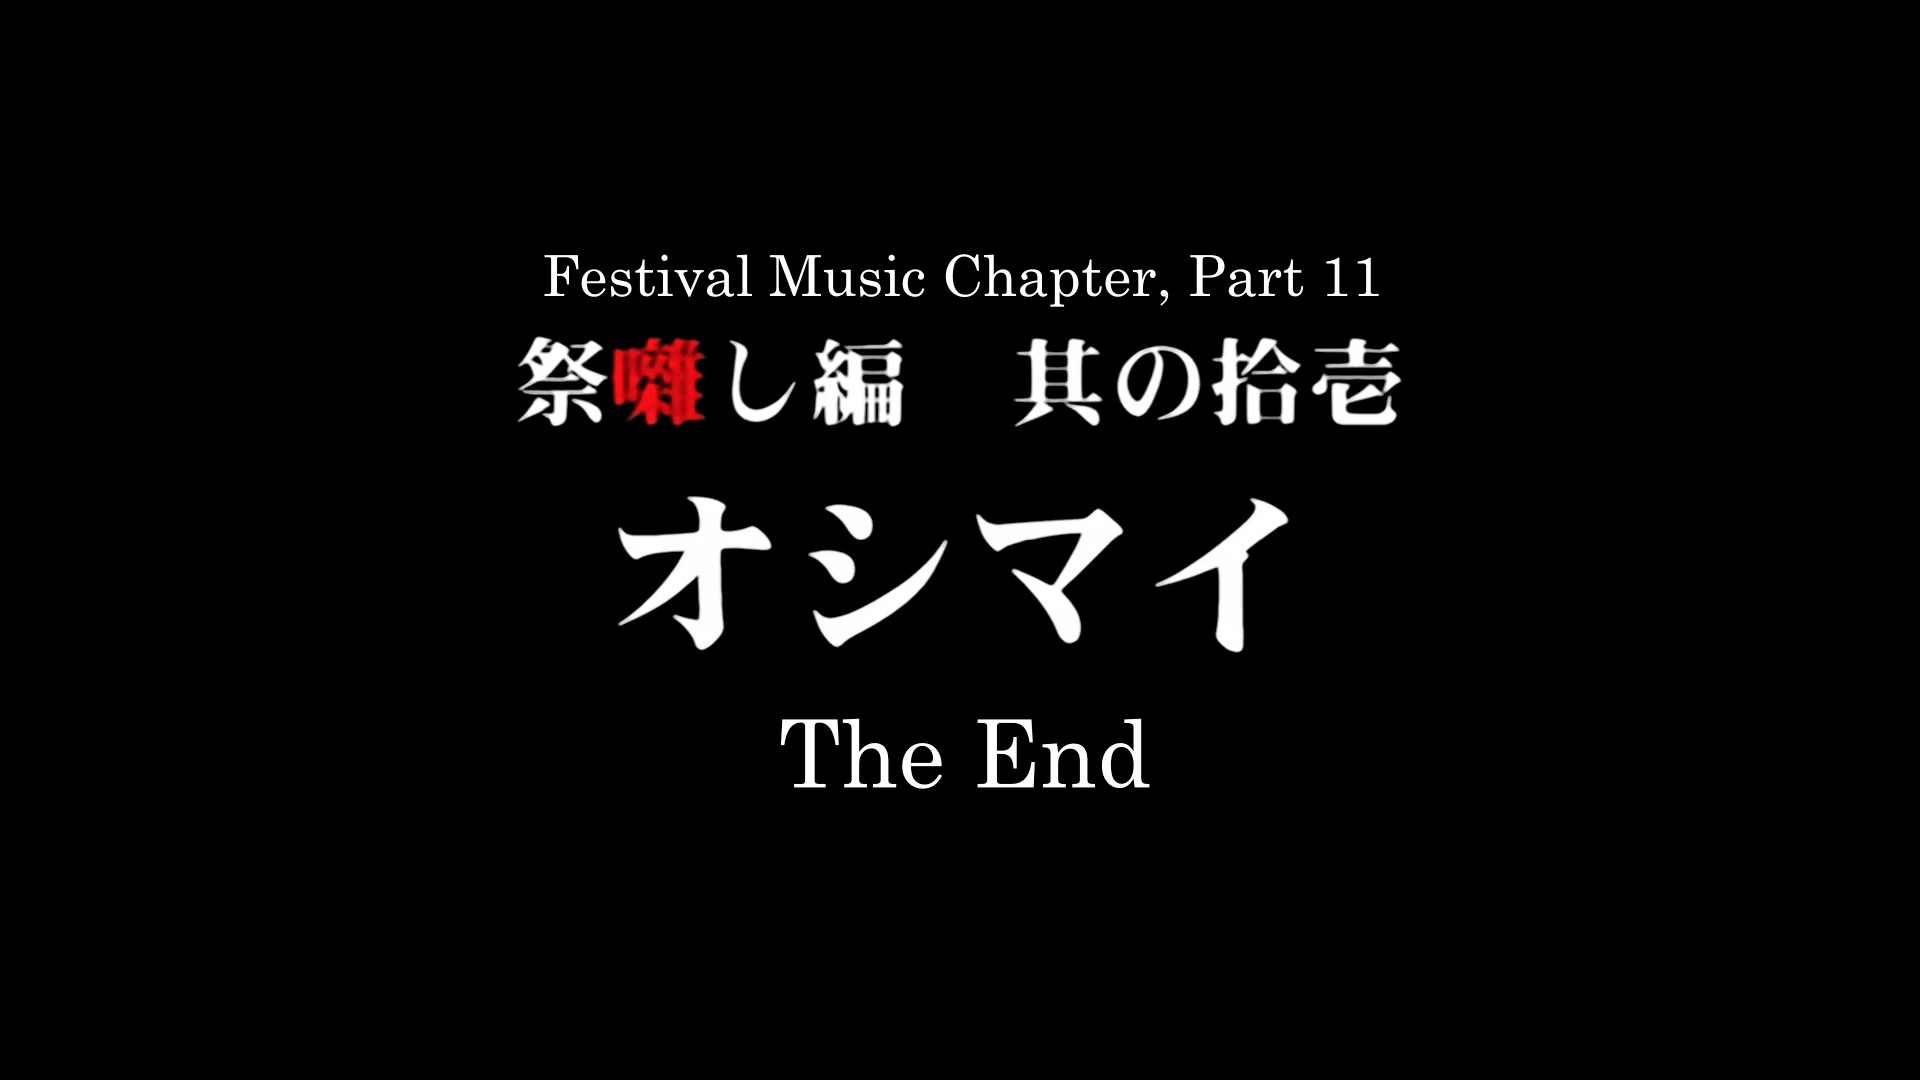 Listen to Higurashi no Naku Koro ni Sotsu Ending Missing Promise on  Spotify & Apple Music